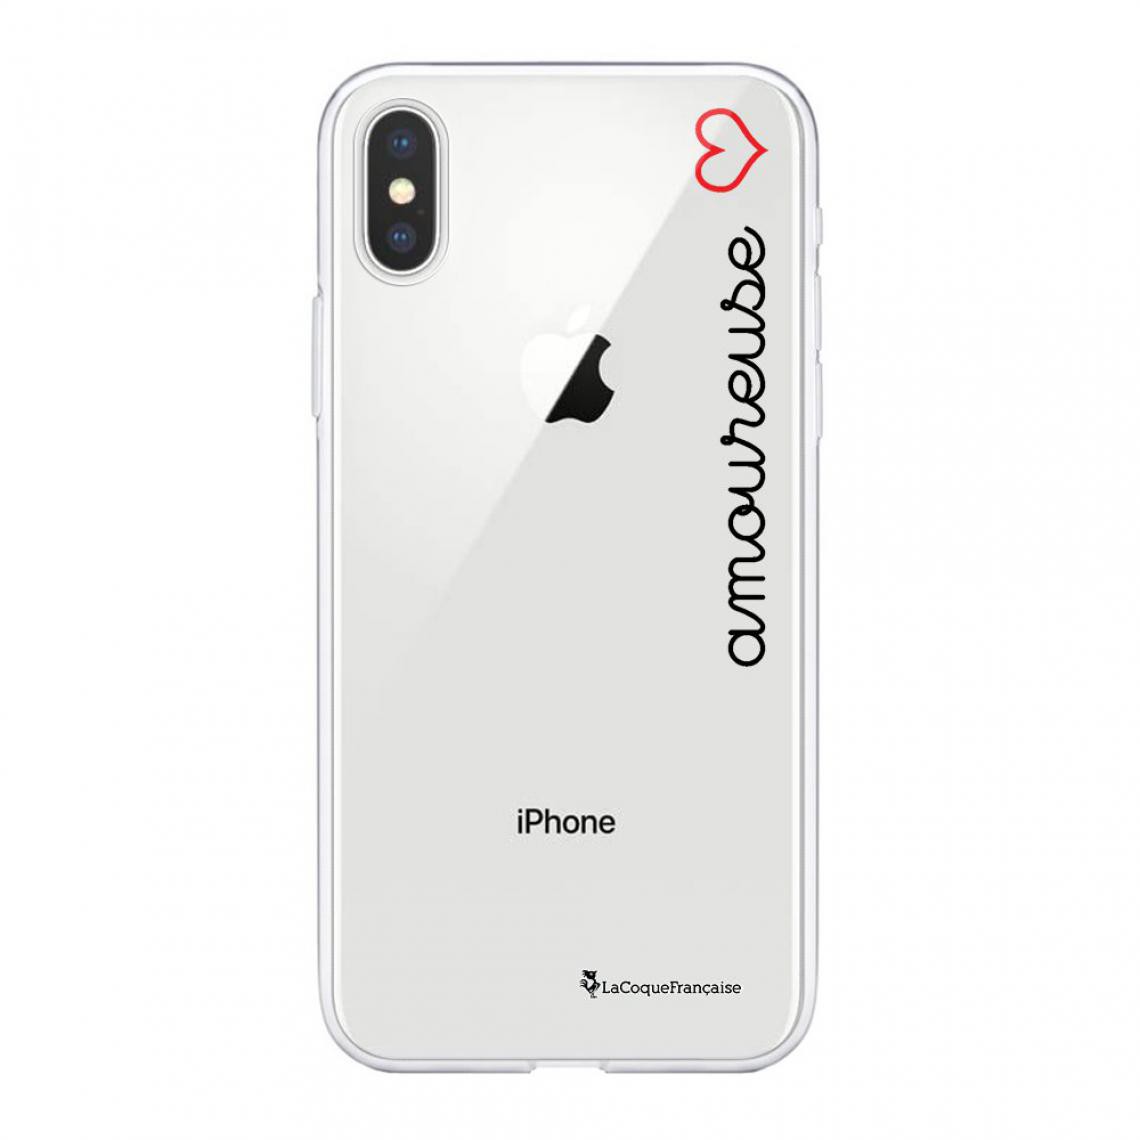 La Coque Francaise - Coque iPhone Xs Max souple silicone transparente - Coque, étui smartphone